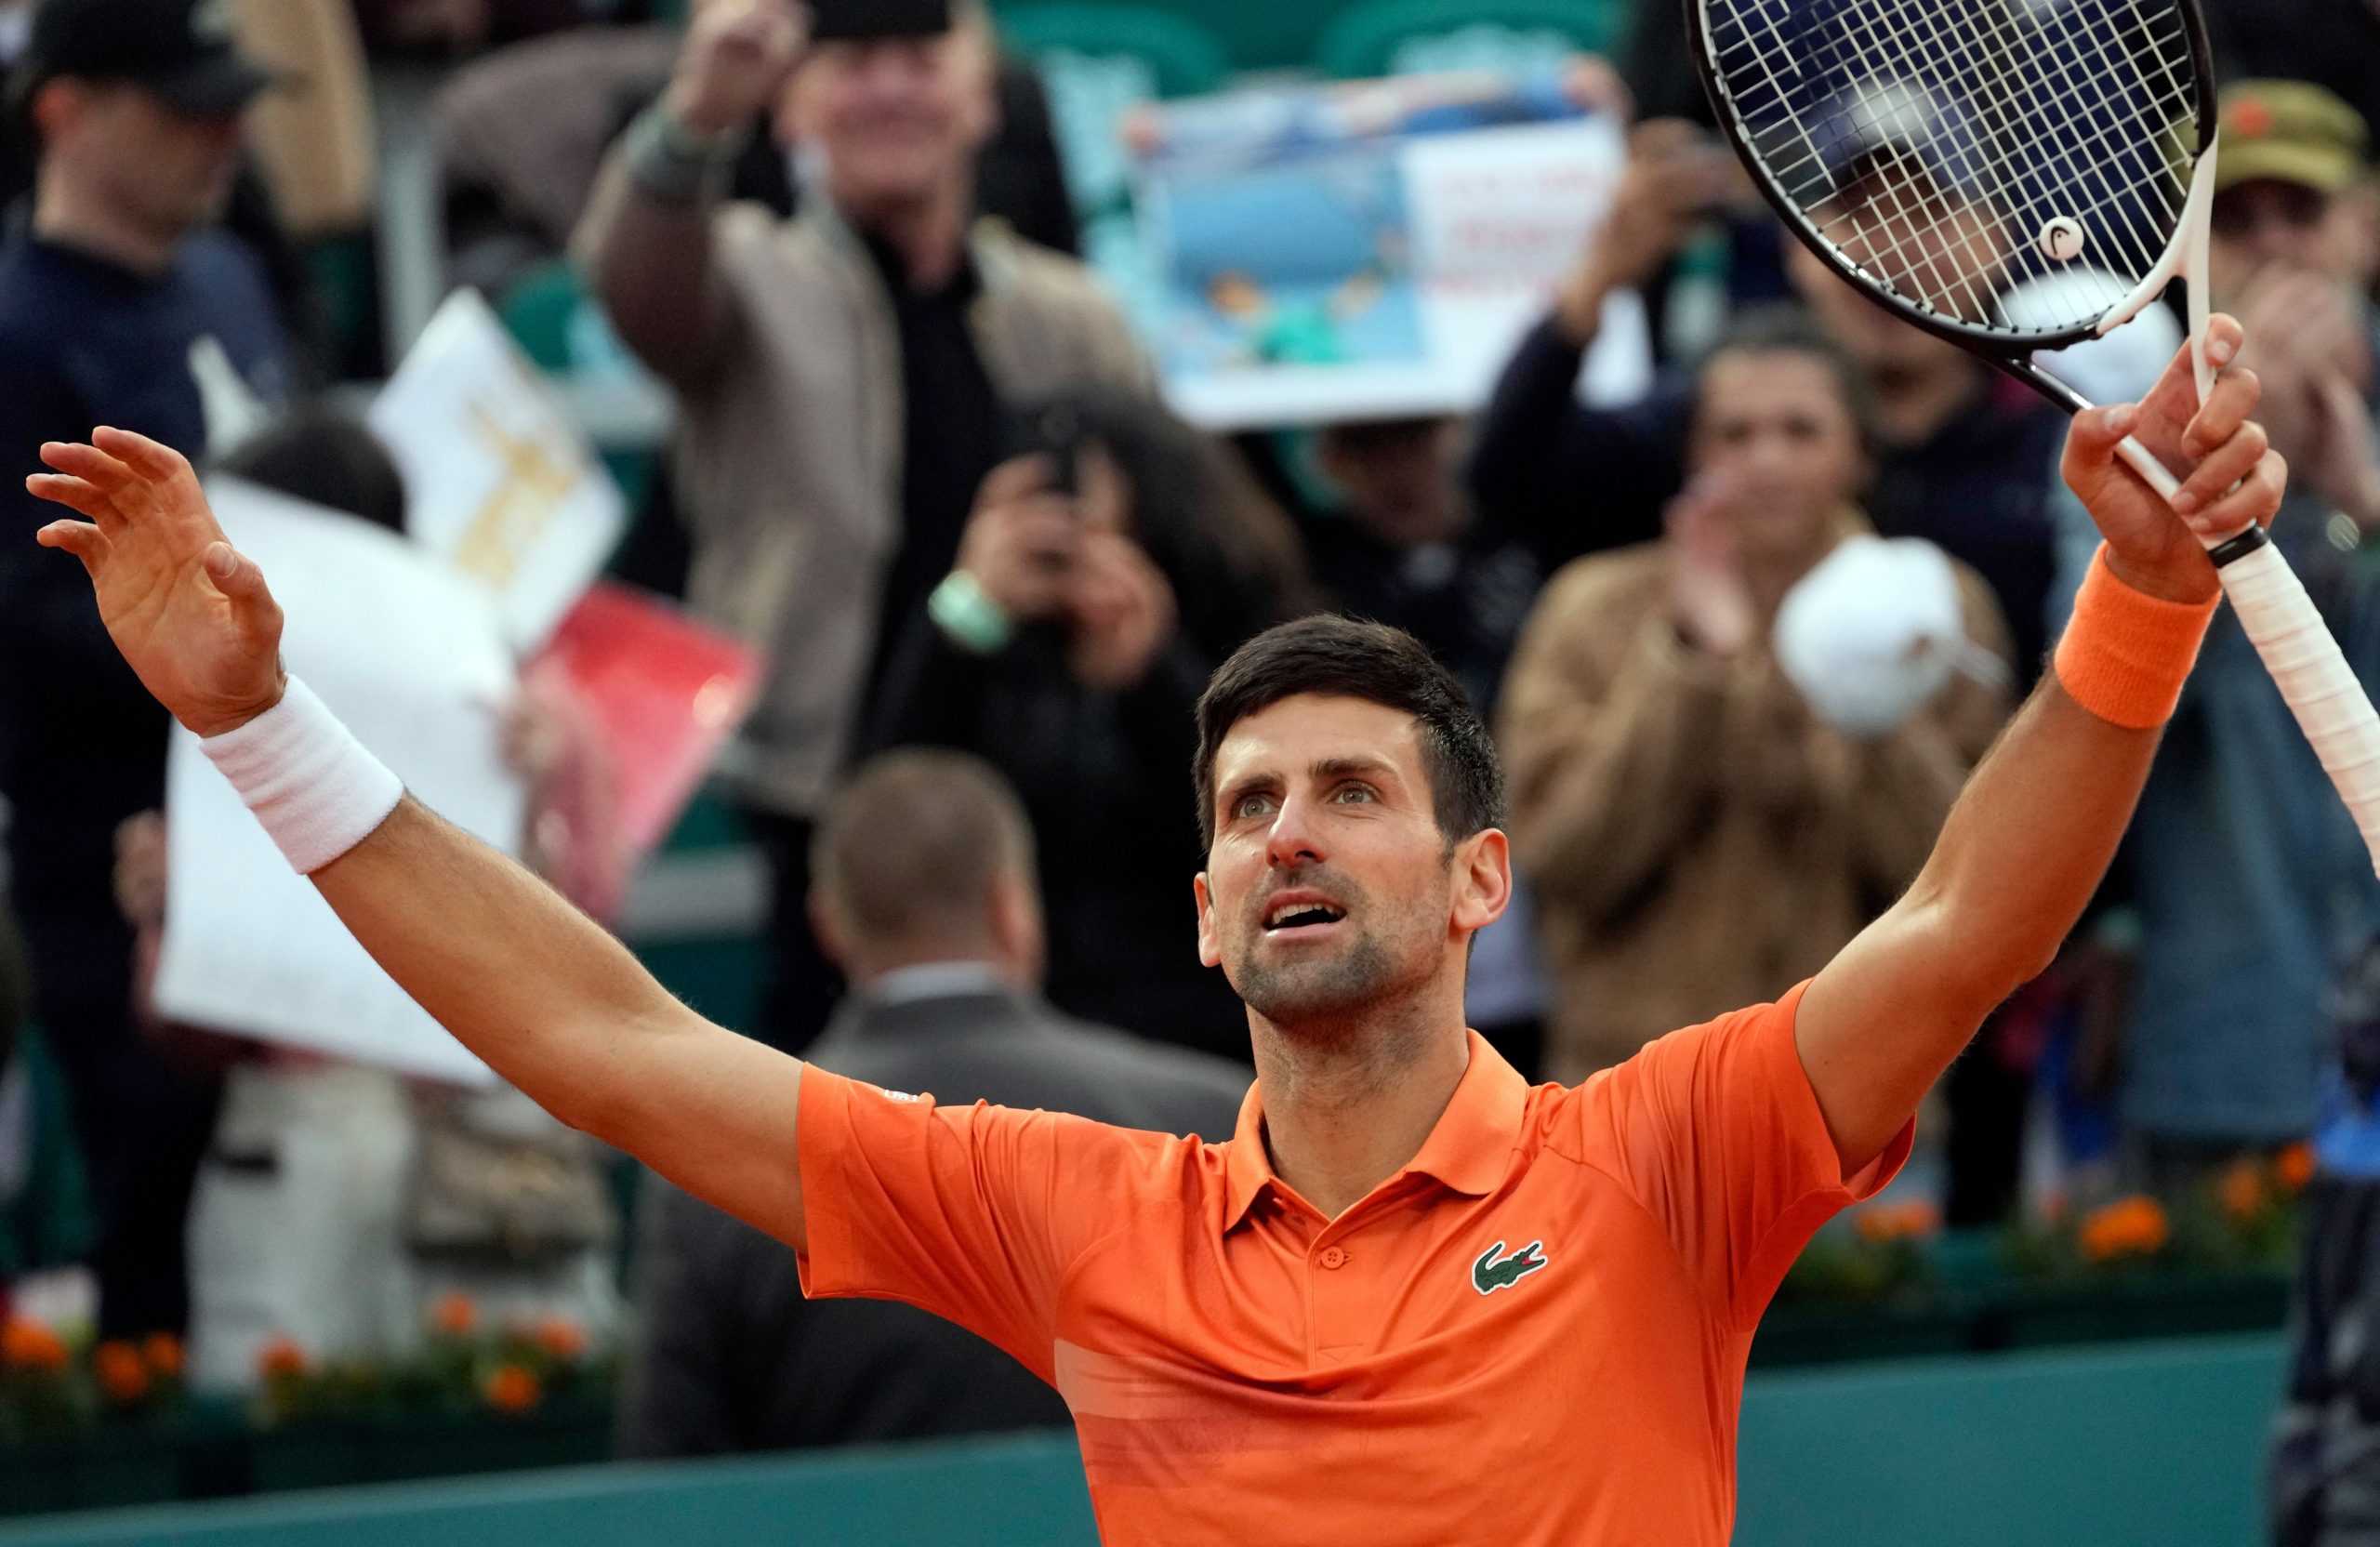 Anti-vax Djokovic has ‘extra’ motivation to win Wimbledon after US Open ban